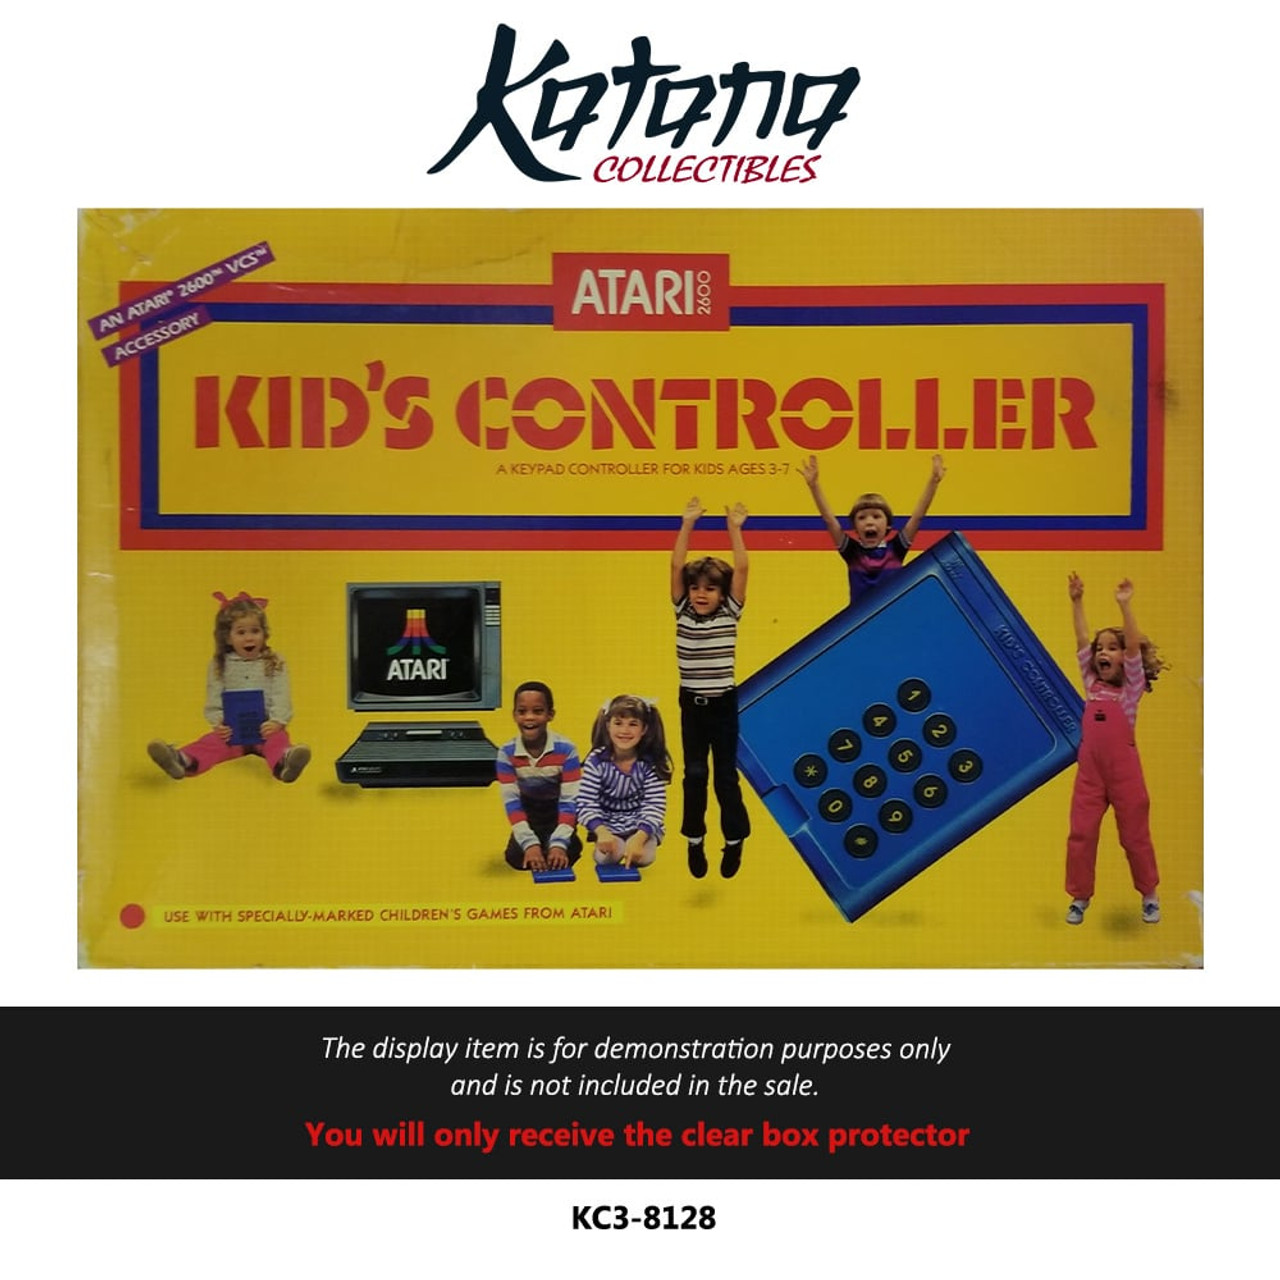 Katana Collectibles Protector For Atari 2600 Kids Controller